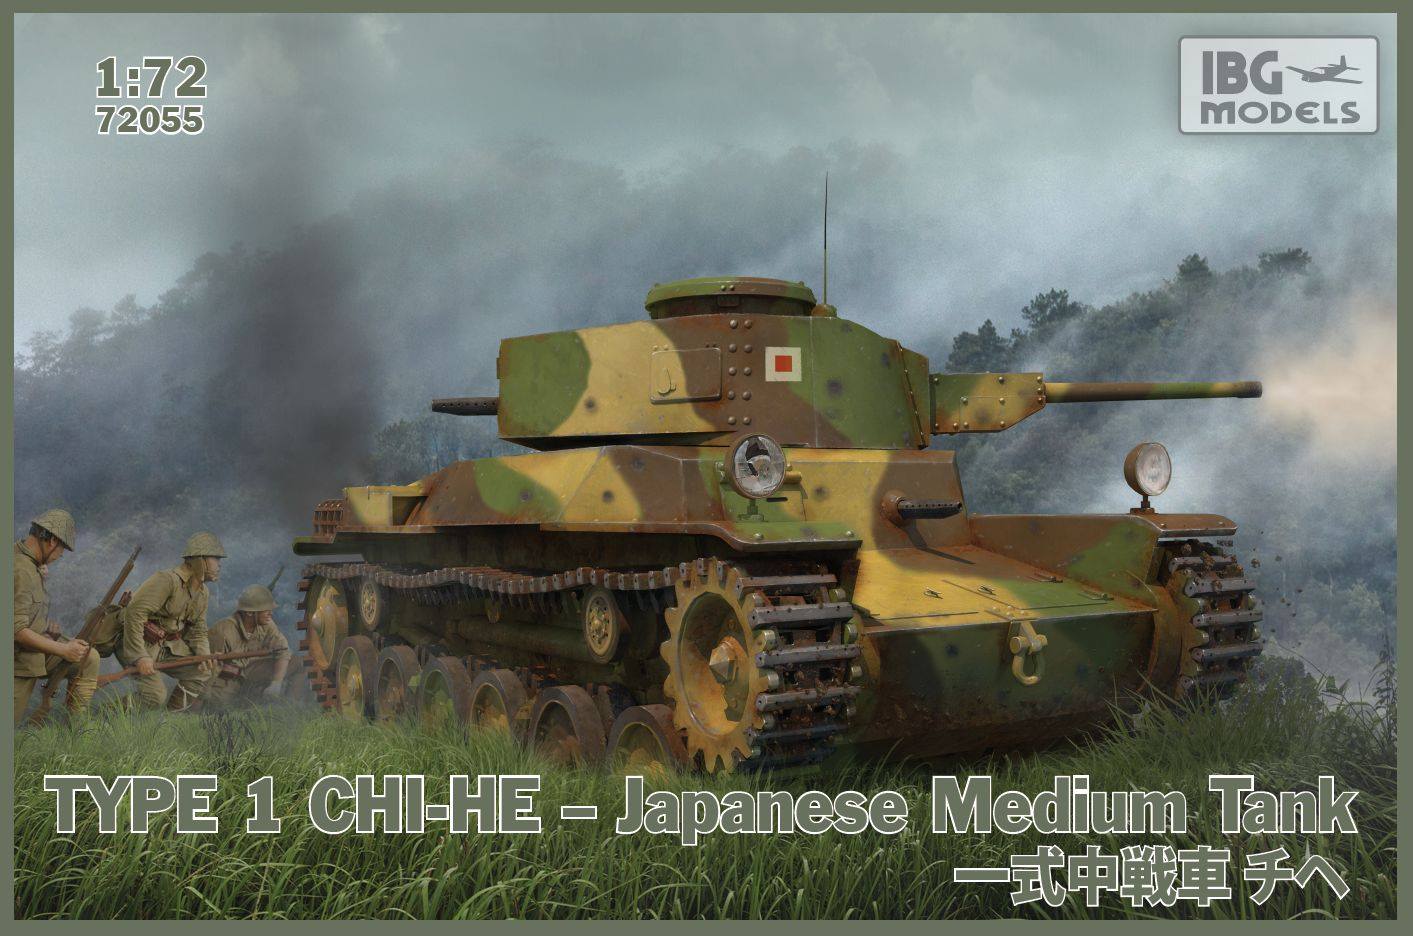 IBG 72088 Type 95 Ha-Go Tank scale 1//72